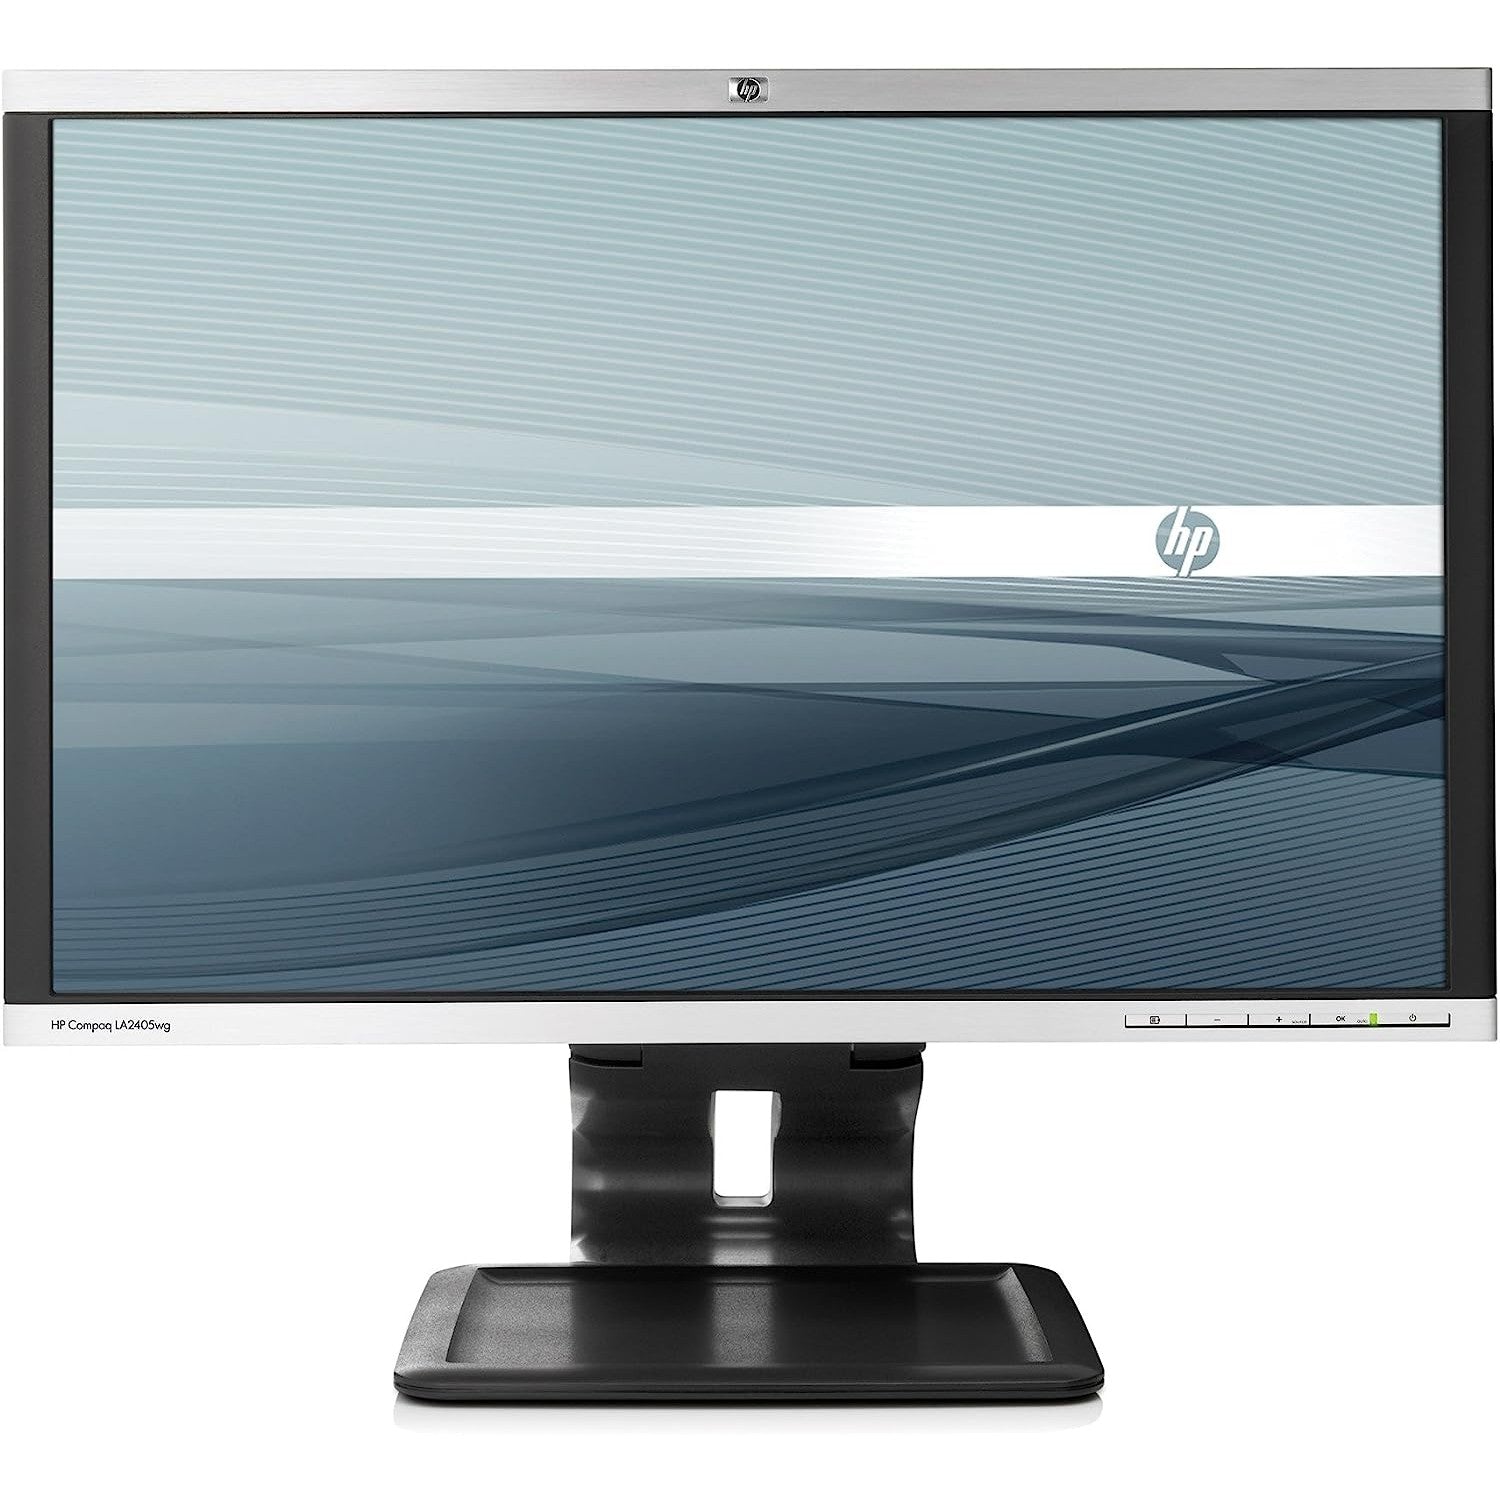 HP LA2405WG 24" Widescreen LCD Monitor - Black - Refurbished Good